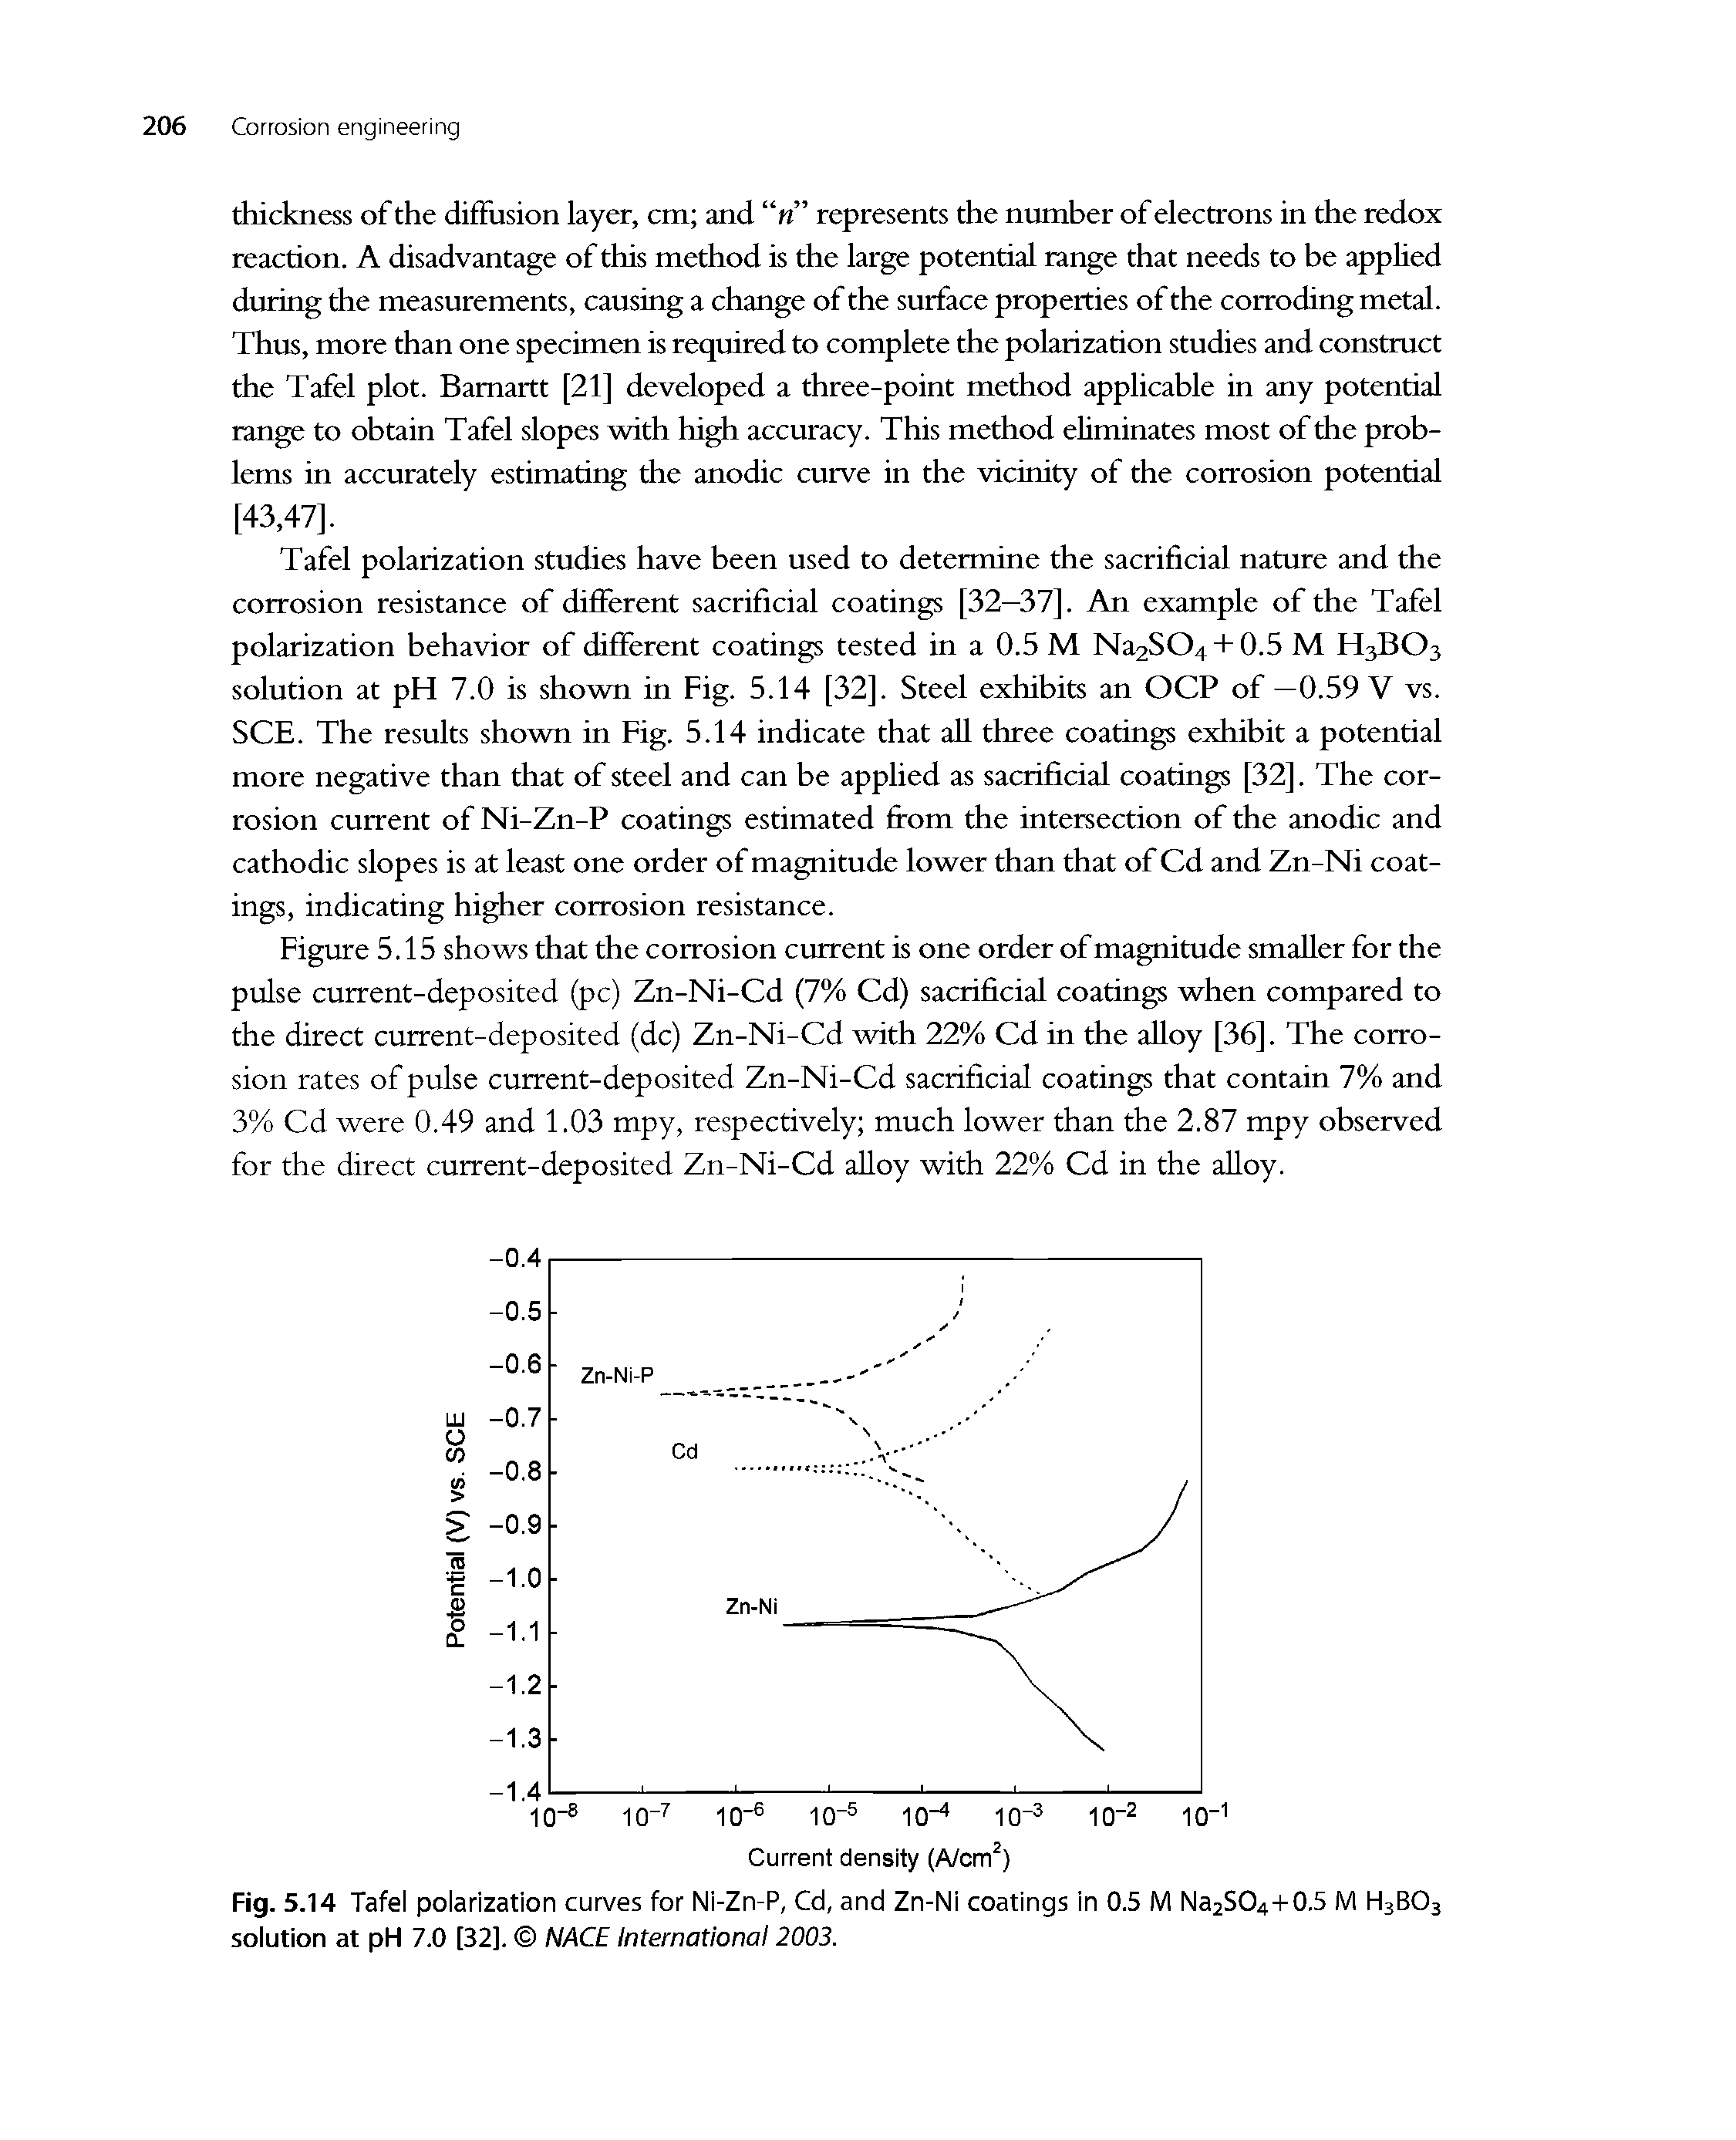 Fig. 5. 14 Tafel polarization curves for Ni-Zn-P, Cd, and Zn-Ni coatings in 0.5 M Na2SO4-i-0.5 M H3BO3 solution at pH 7.0 [32]. NACE International 2003.